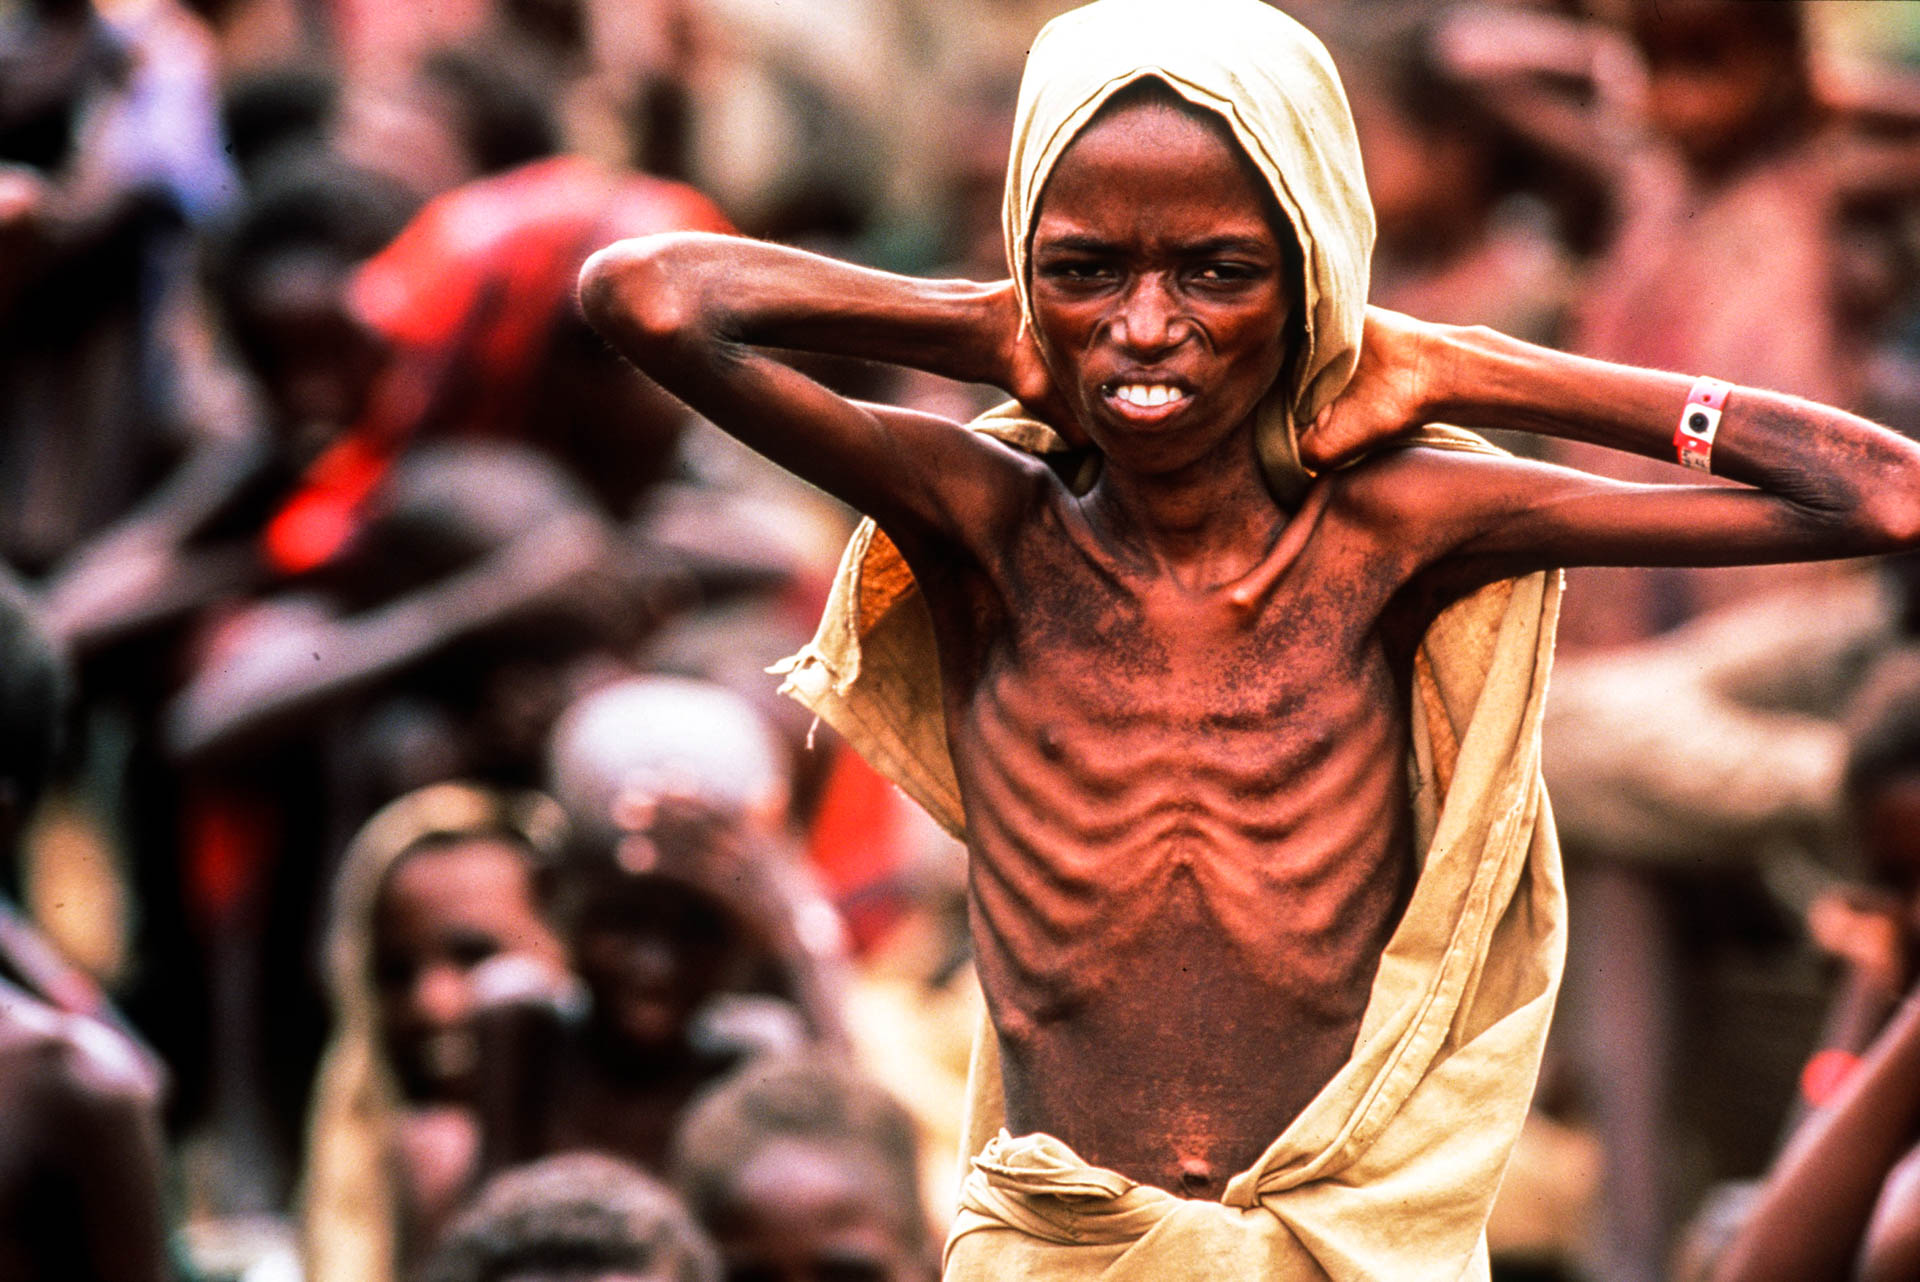  Bardera,  Somalia - December 1992 
An everyday scene in Somalia: the sight of a boy all skin and bones doesn't shock anyone. 